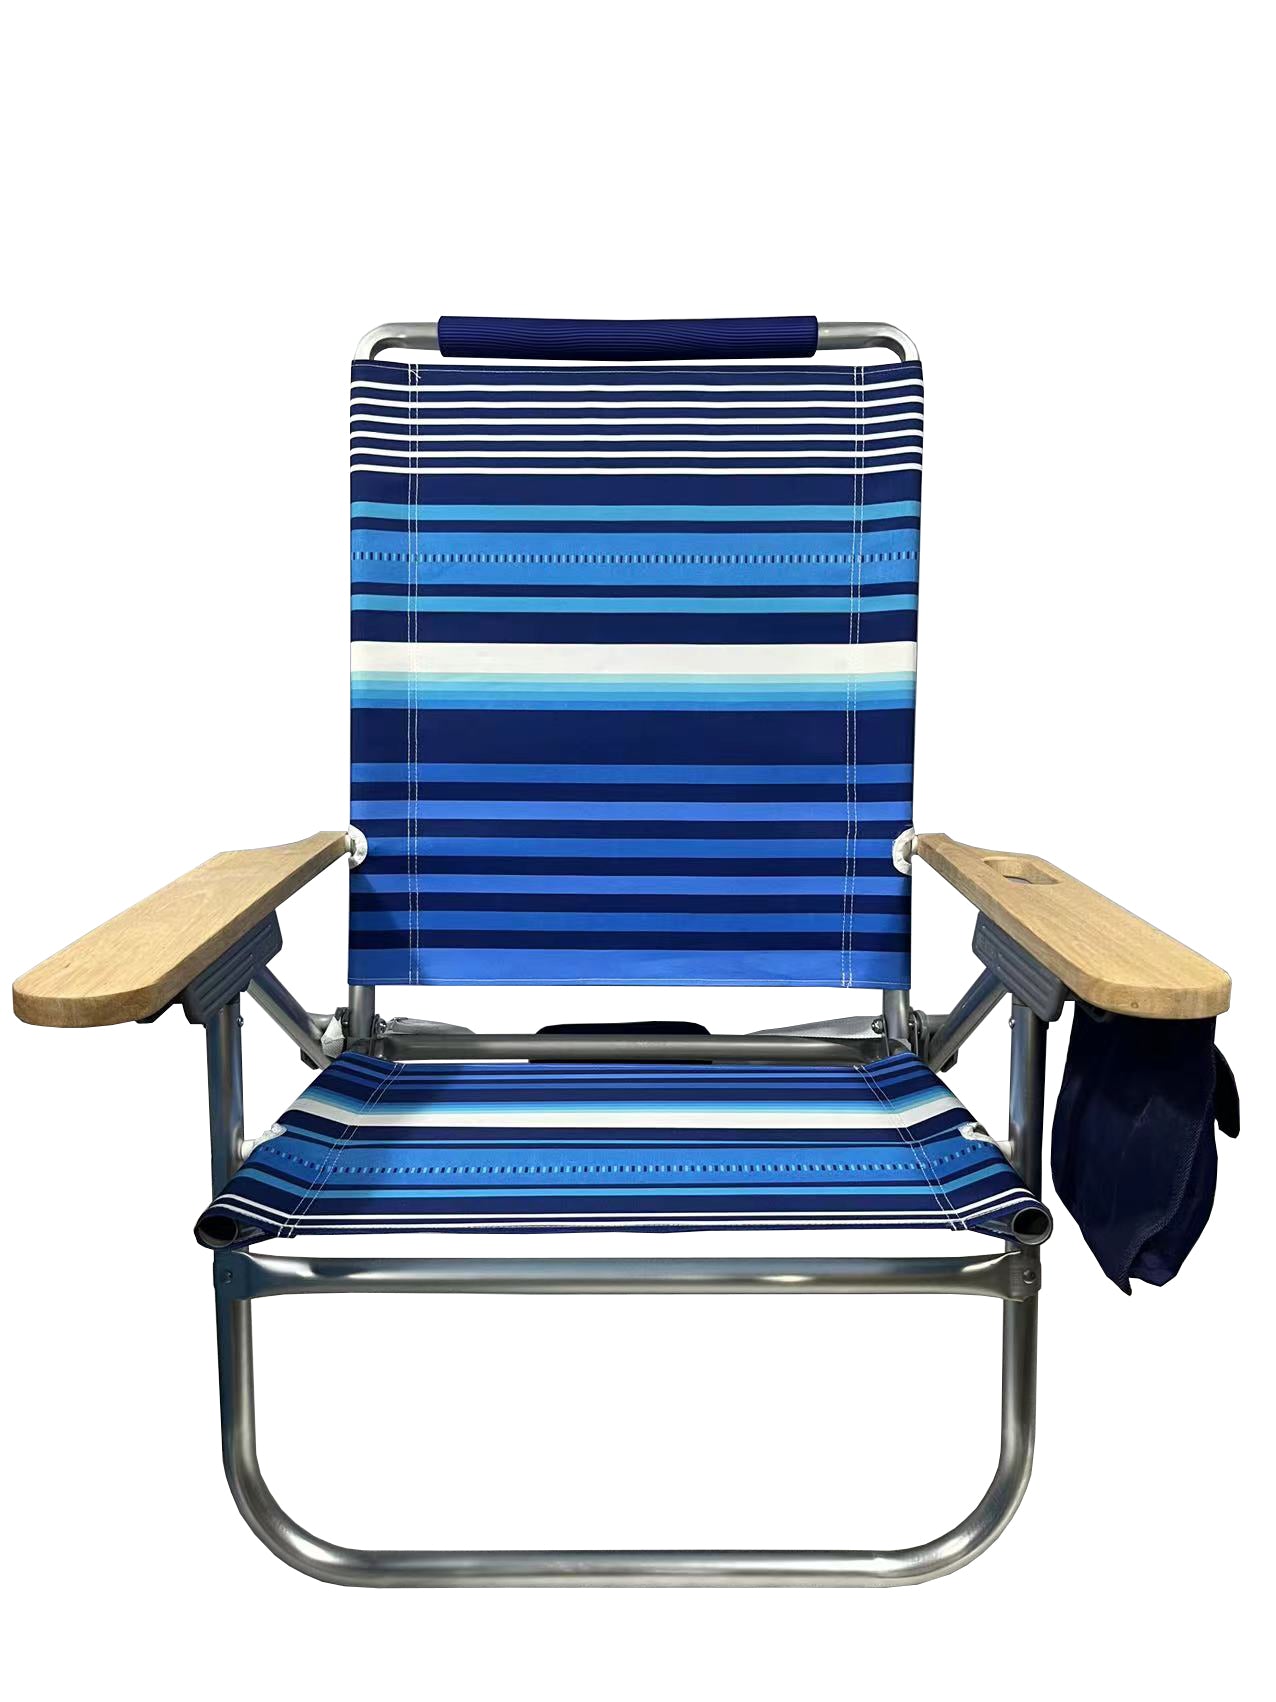 Beach Bum Aluminium Chair - Navy & Blue Stripe - NEARLY GONE